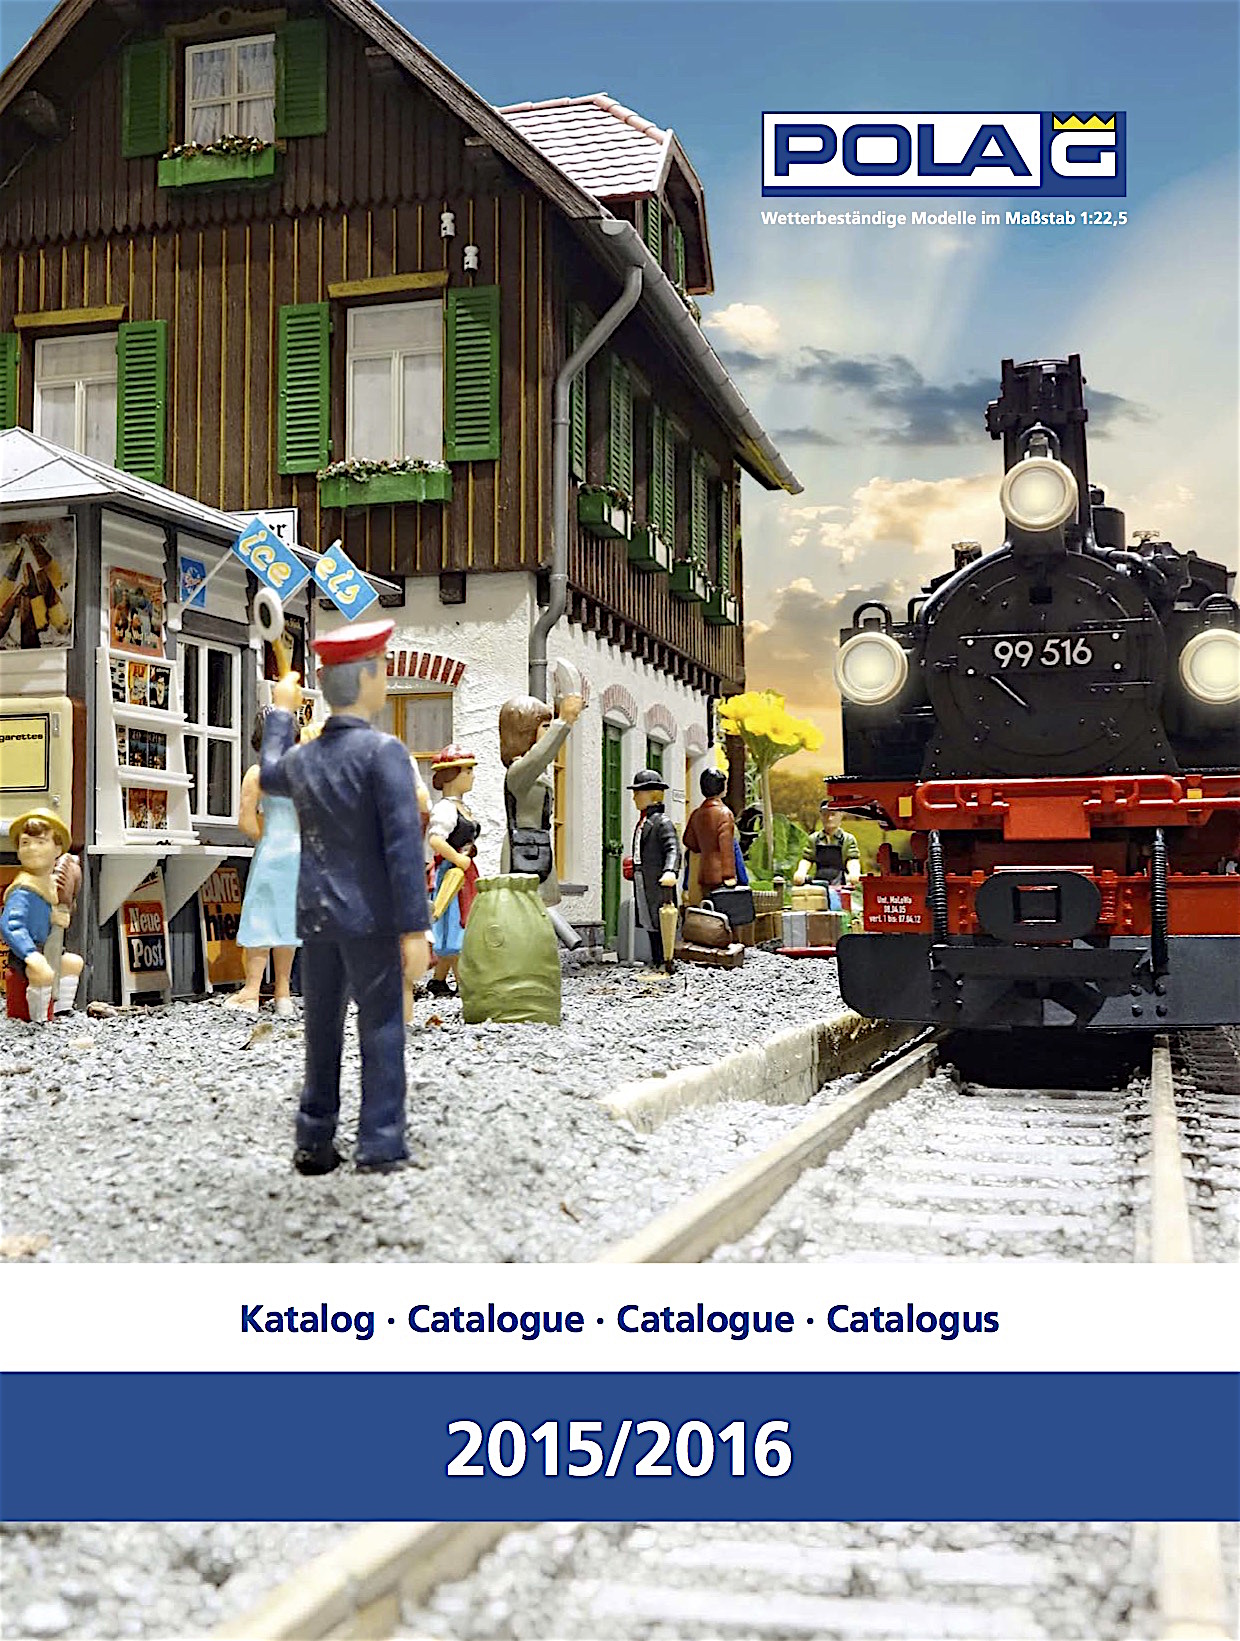 Pola Katalog (Catalogue) 2015/2016